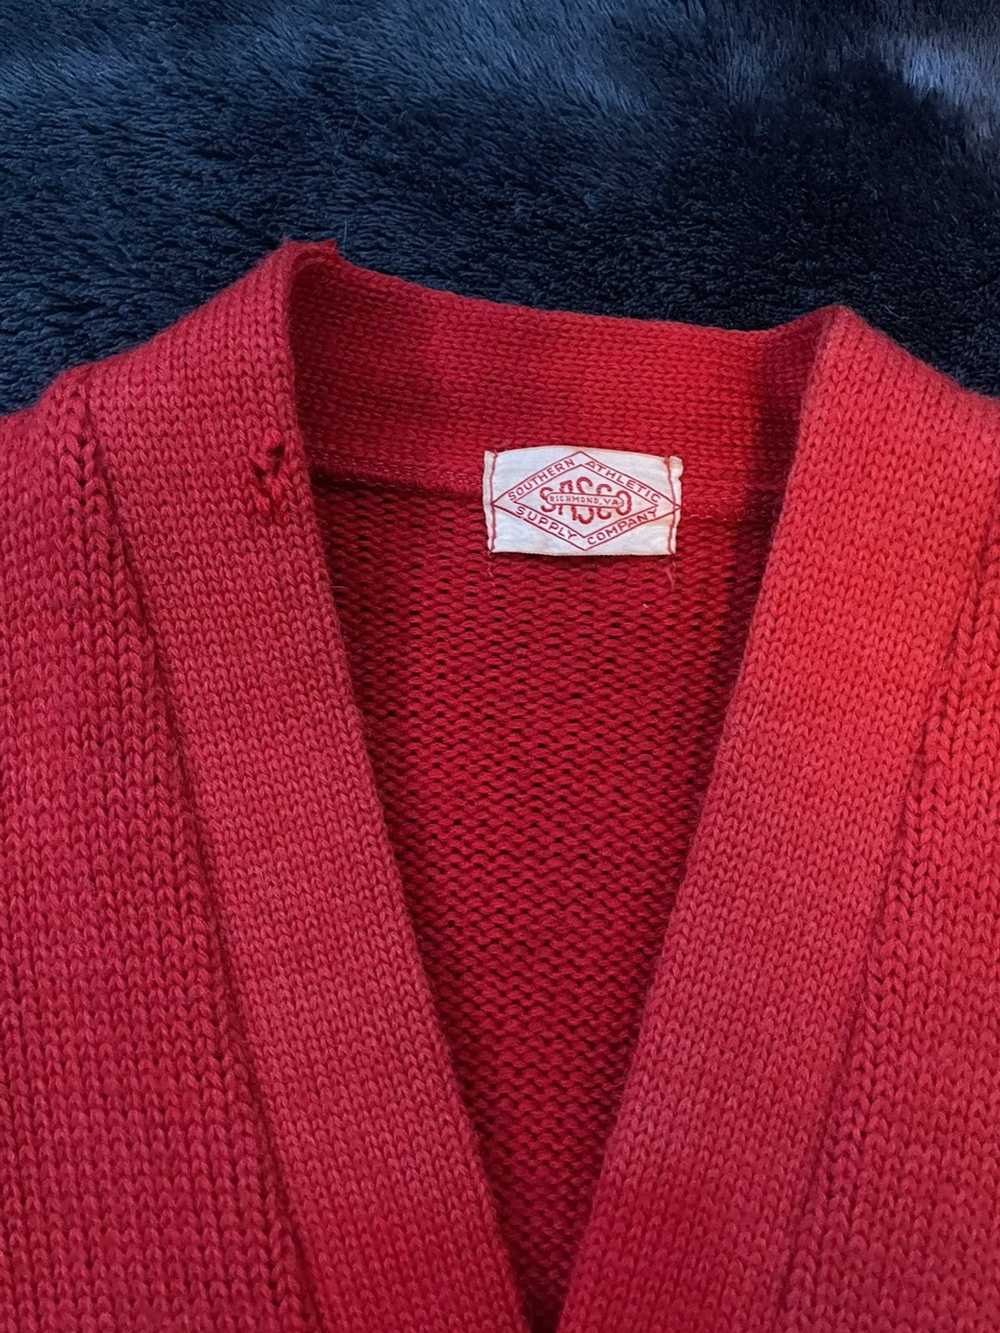 Vintage Vintage 1941 all American wool knit cardi… - image 8